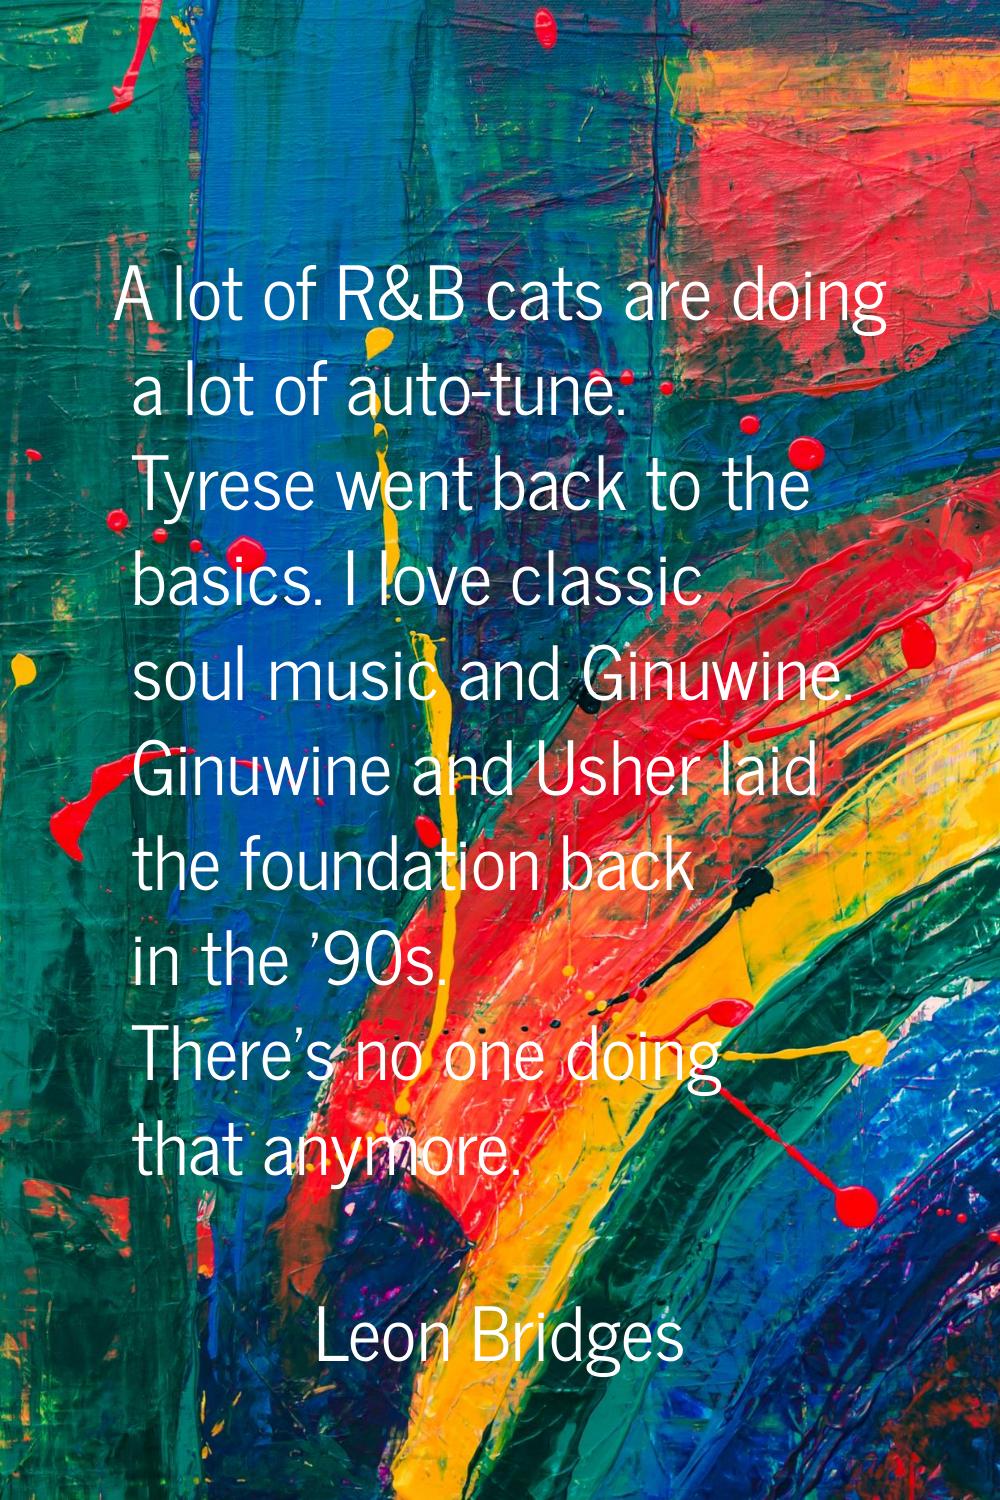 A lot of R&B cats are doing a lot of auto-tune. Tyrese went back to the basics. I love classic soul